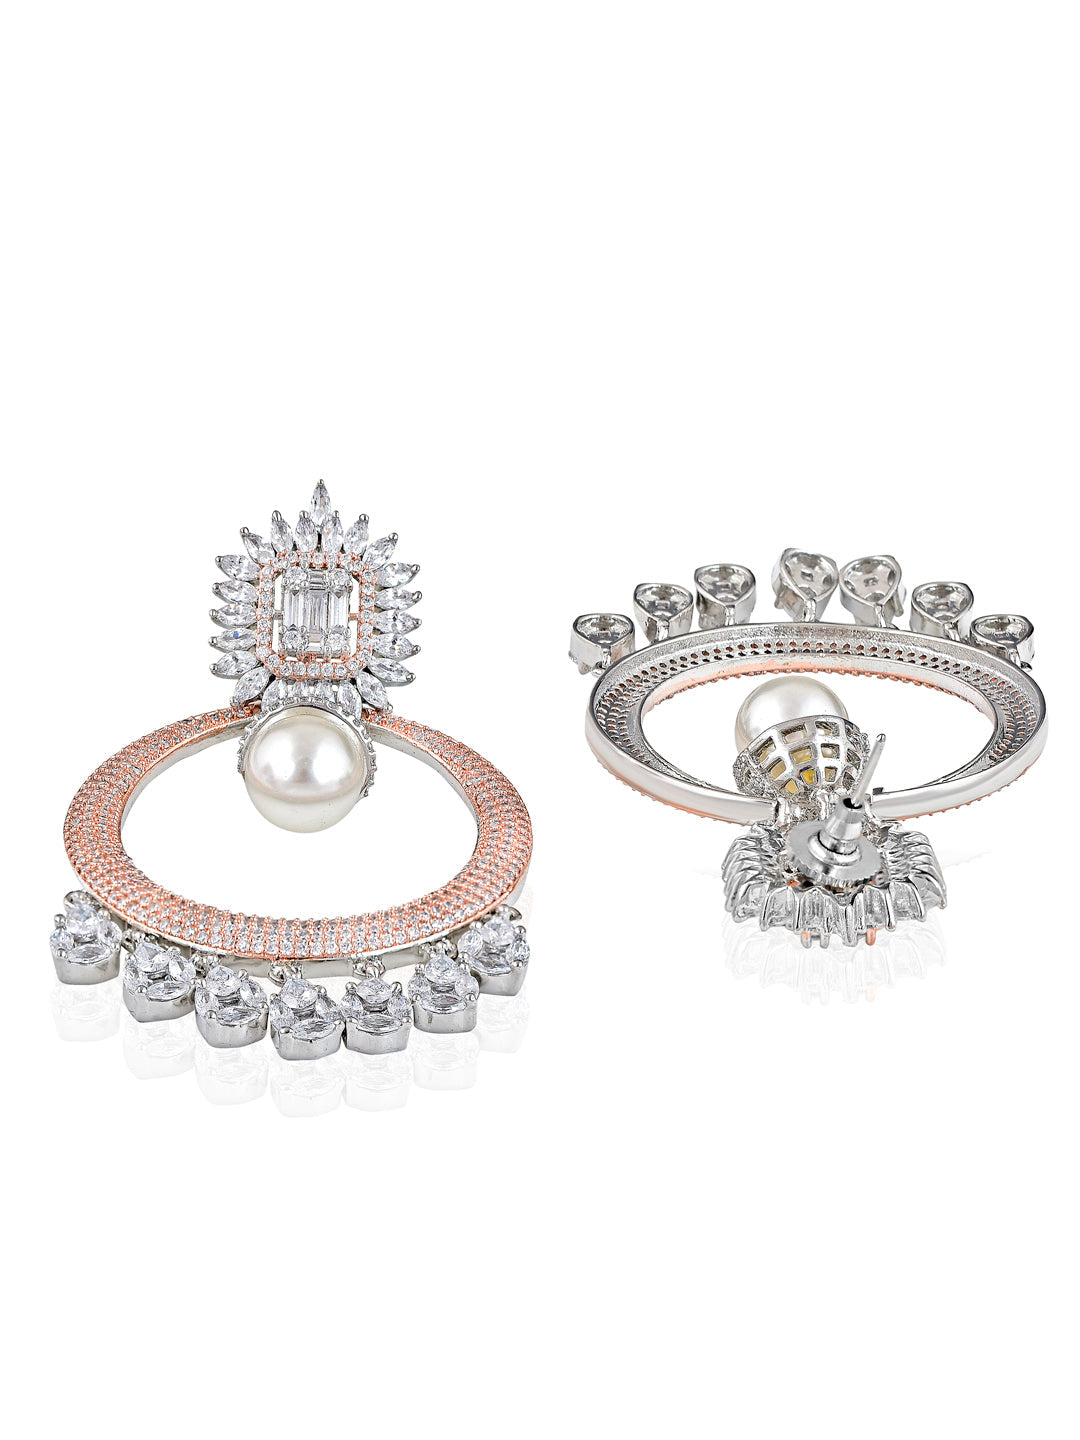 Buy Losa Fancy Statement Rhinestone Bib Necklace Earrings Wedding Bridal Set  Blue at Amazon.in